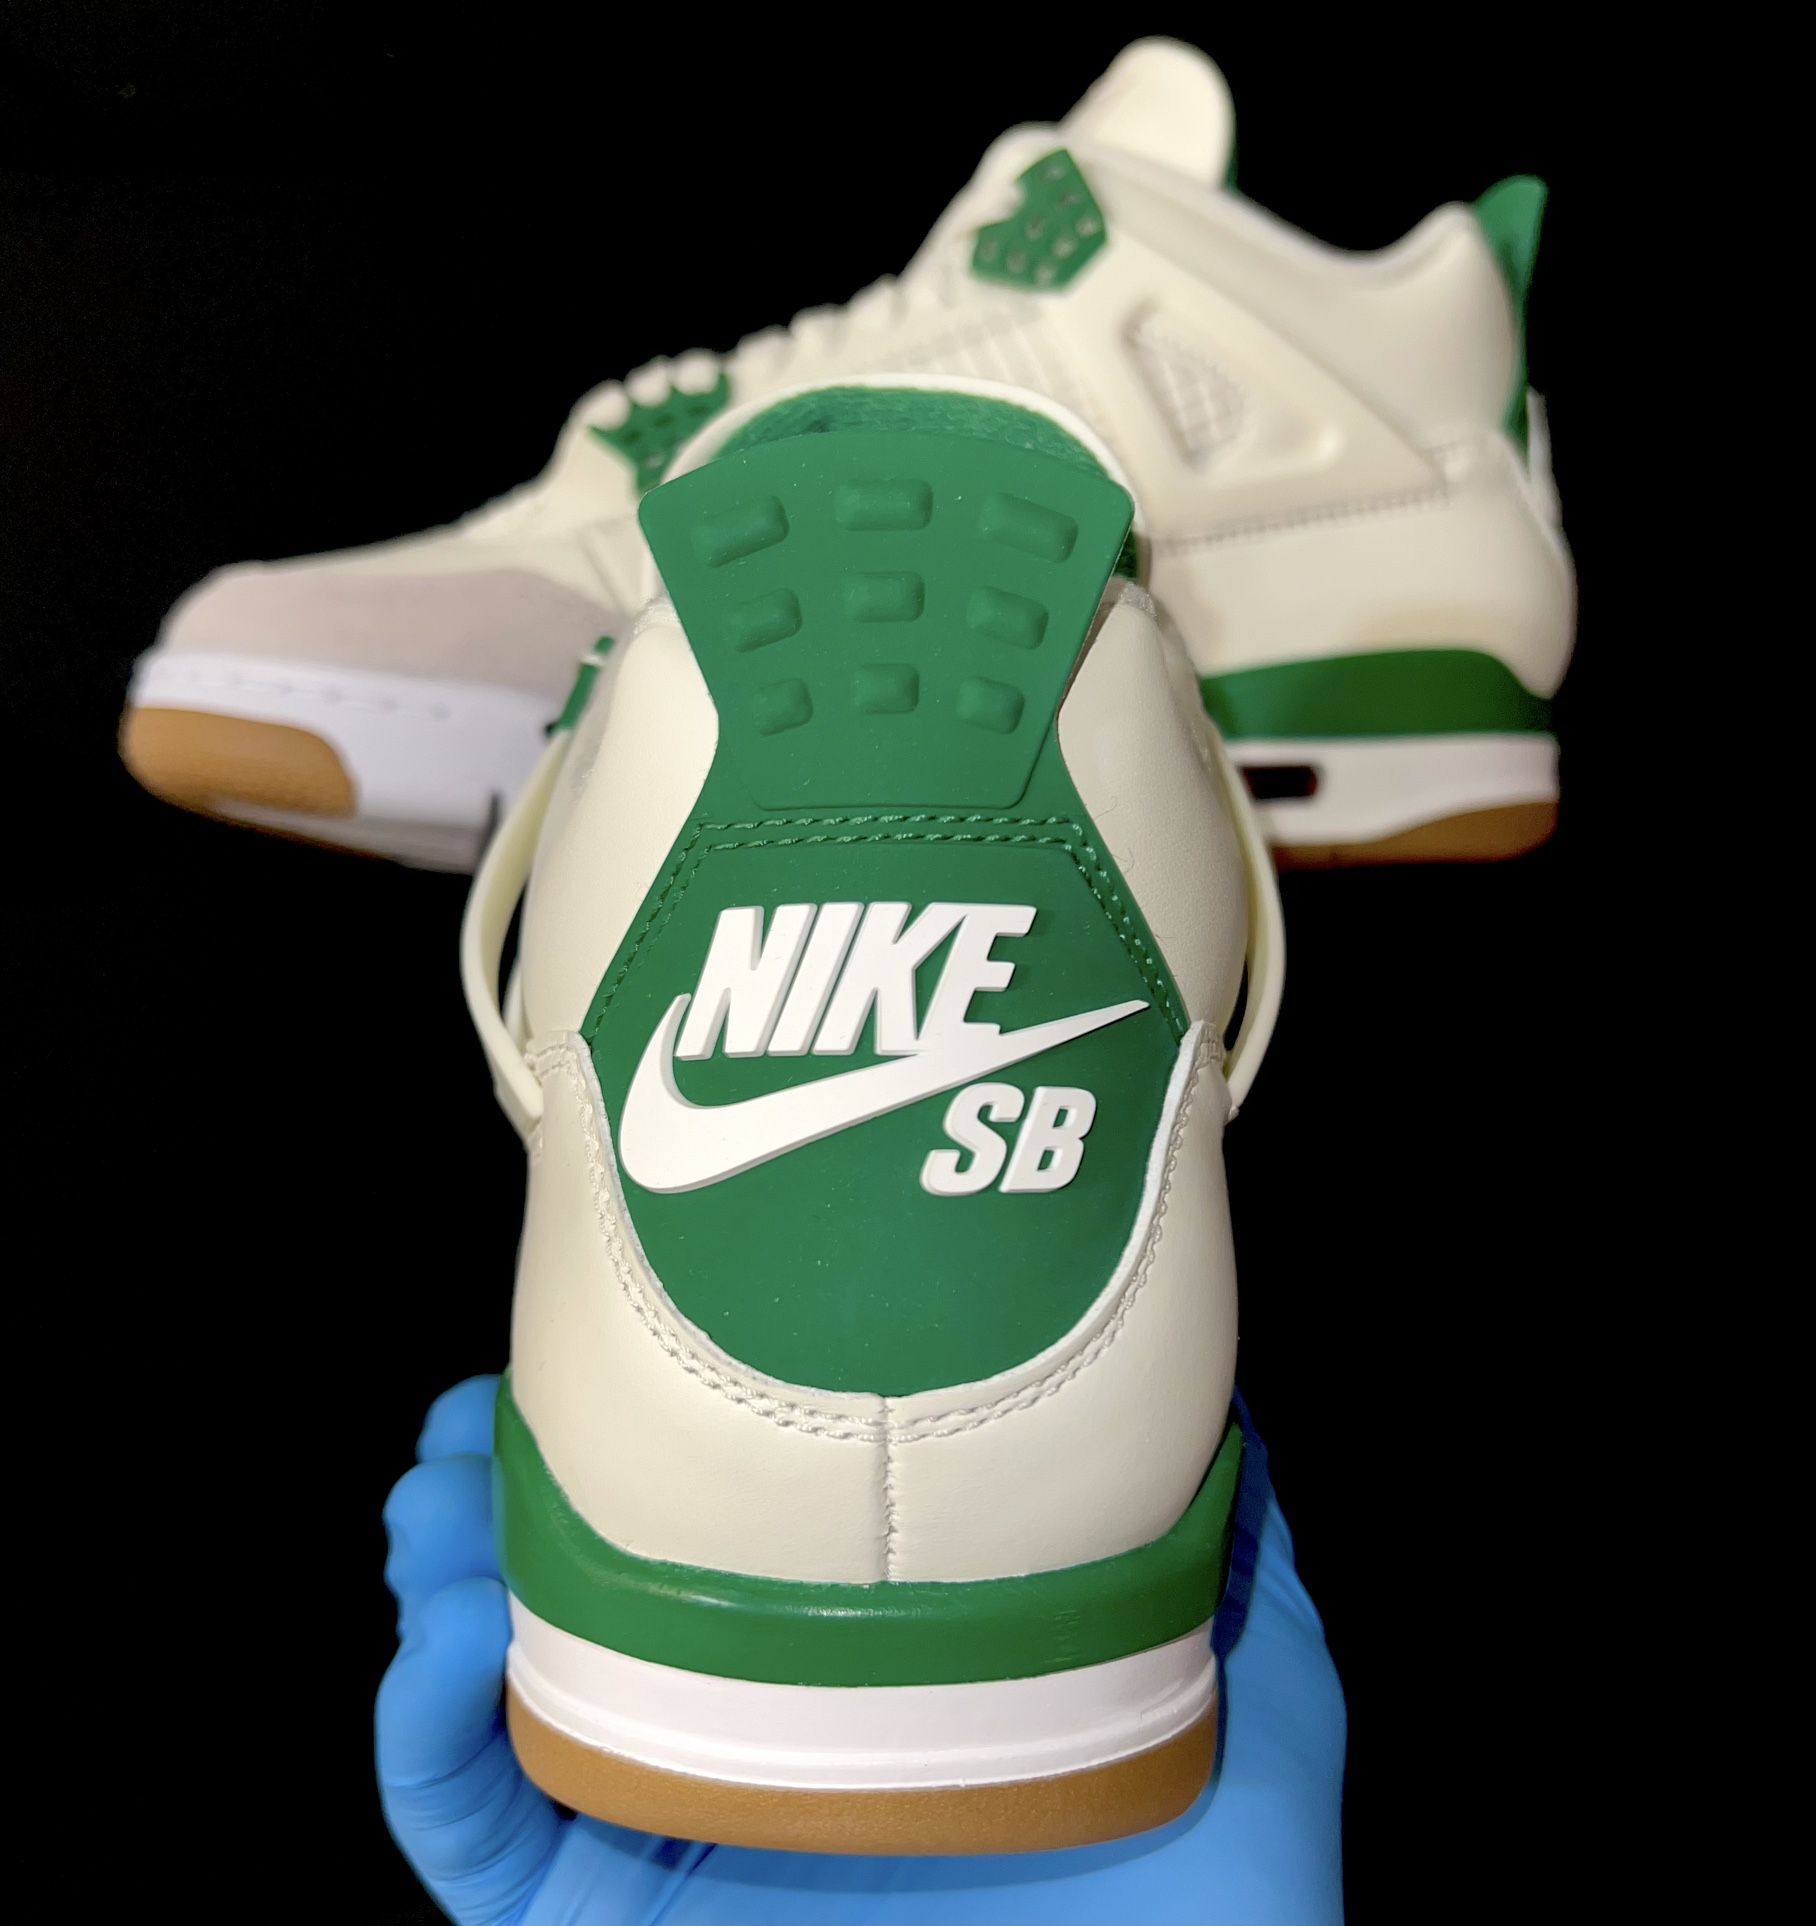 Jordan 4 Nike Sb 100% Authentic 8.5 US 